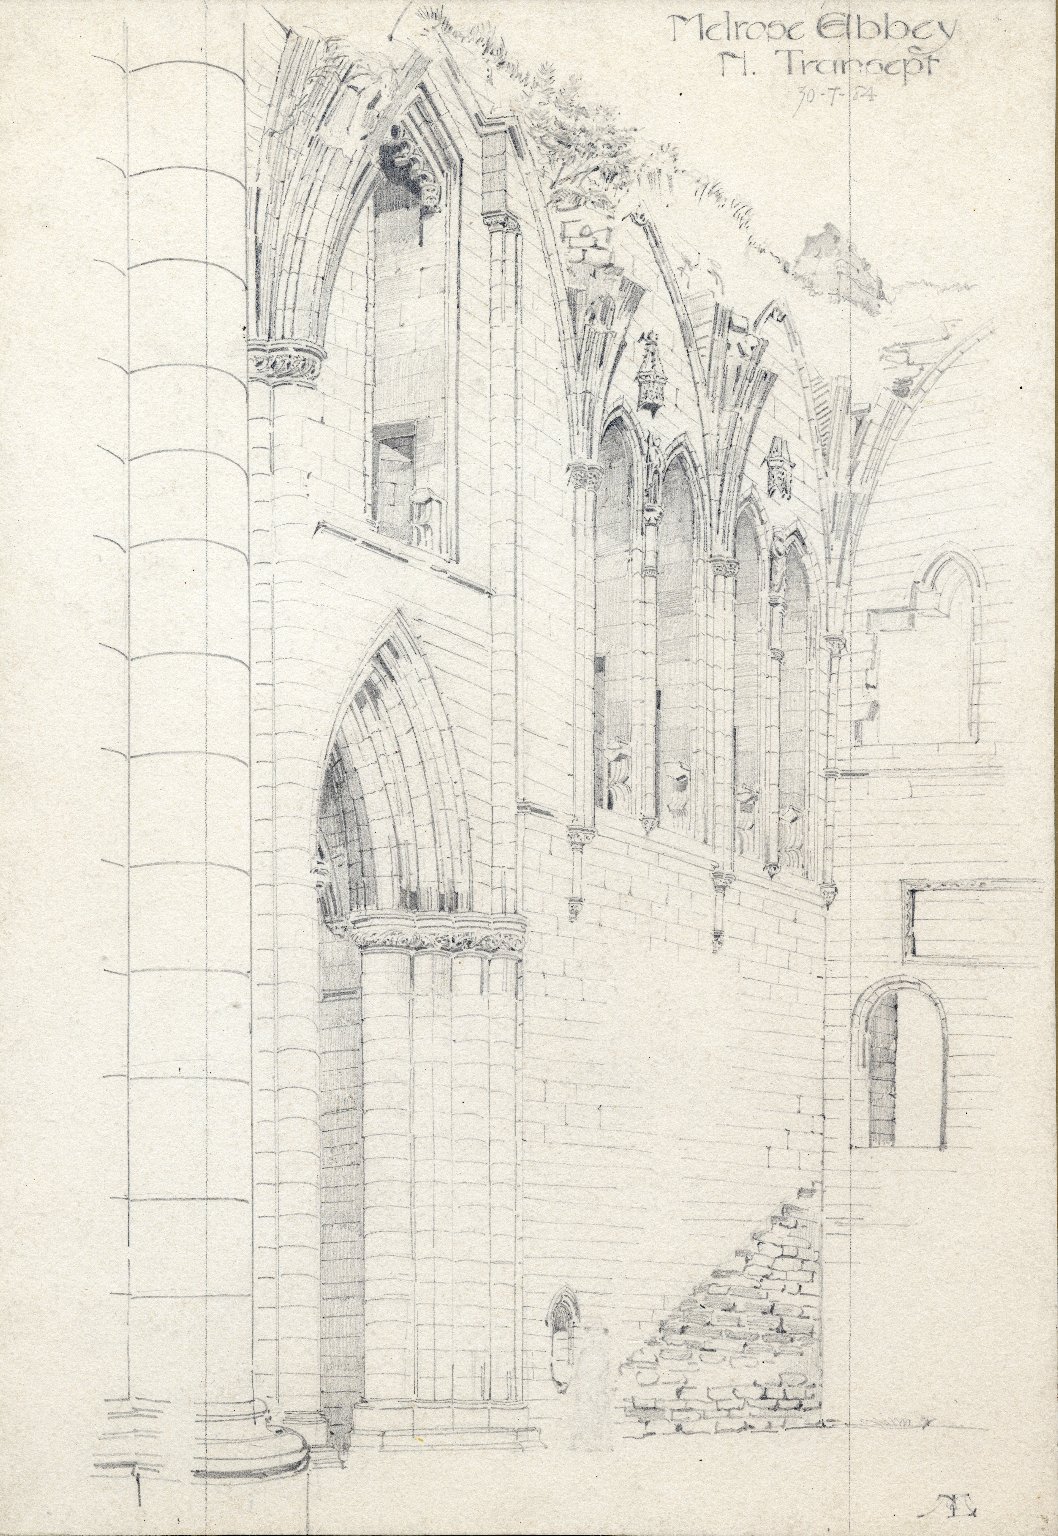 North Transept of Melrose Abbey